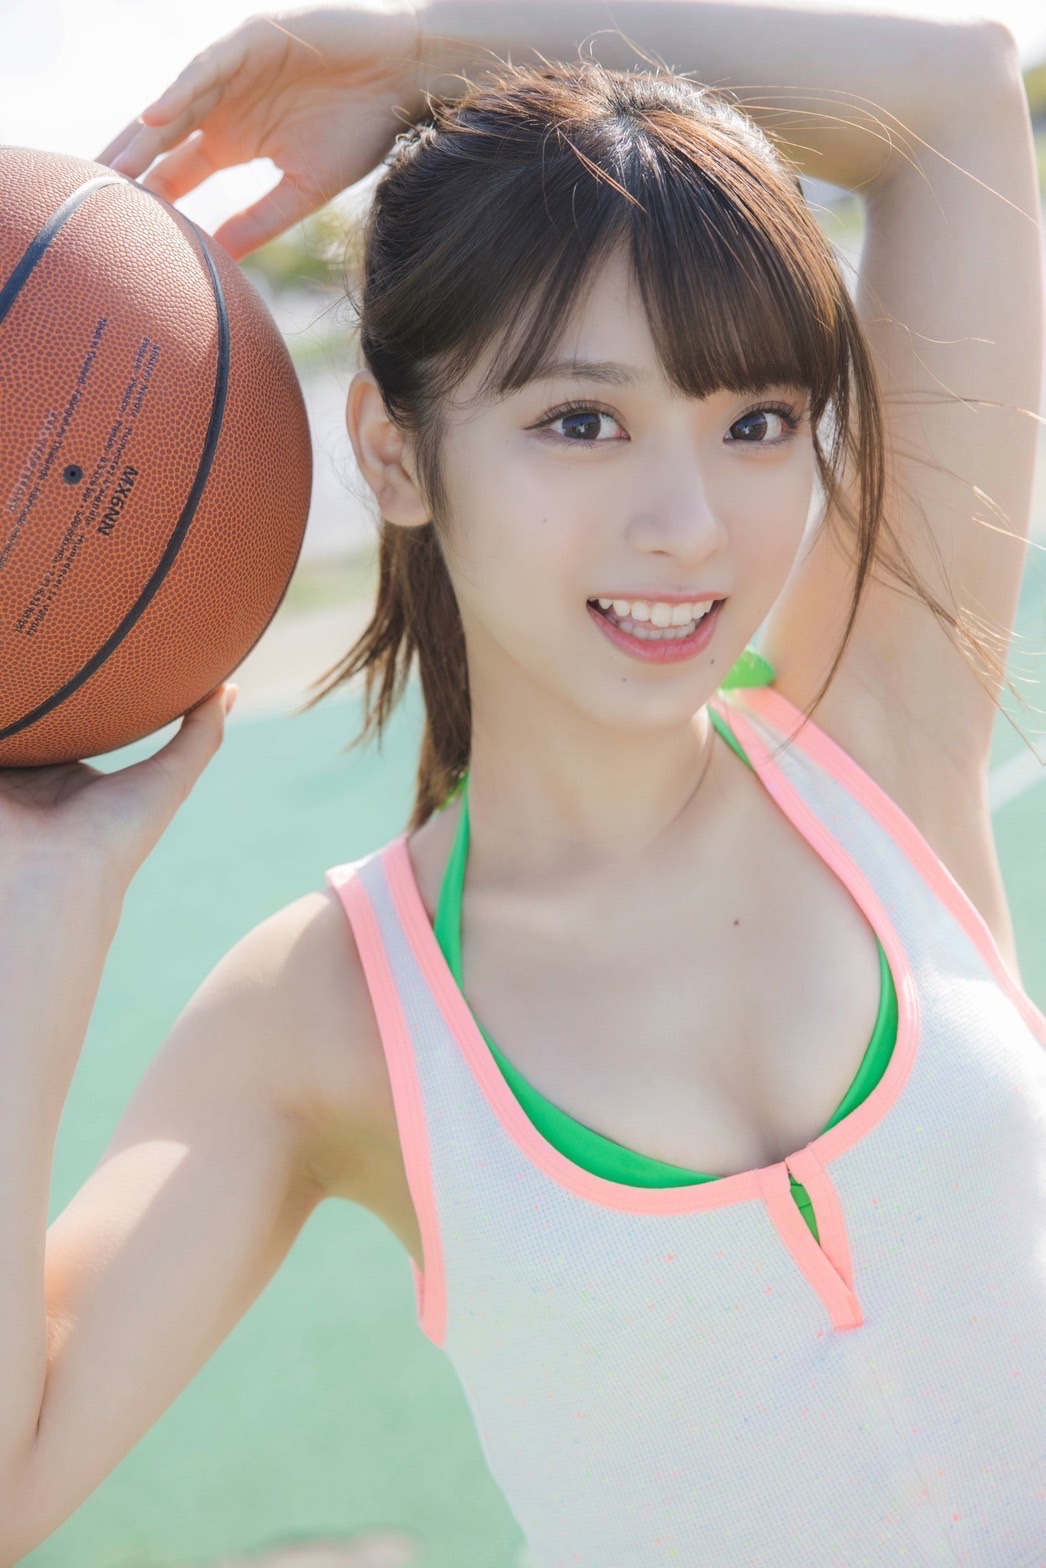 Women Women Outdoors Model Japanese Model Asian Marupi Basketball 1046x1568